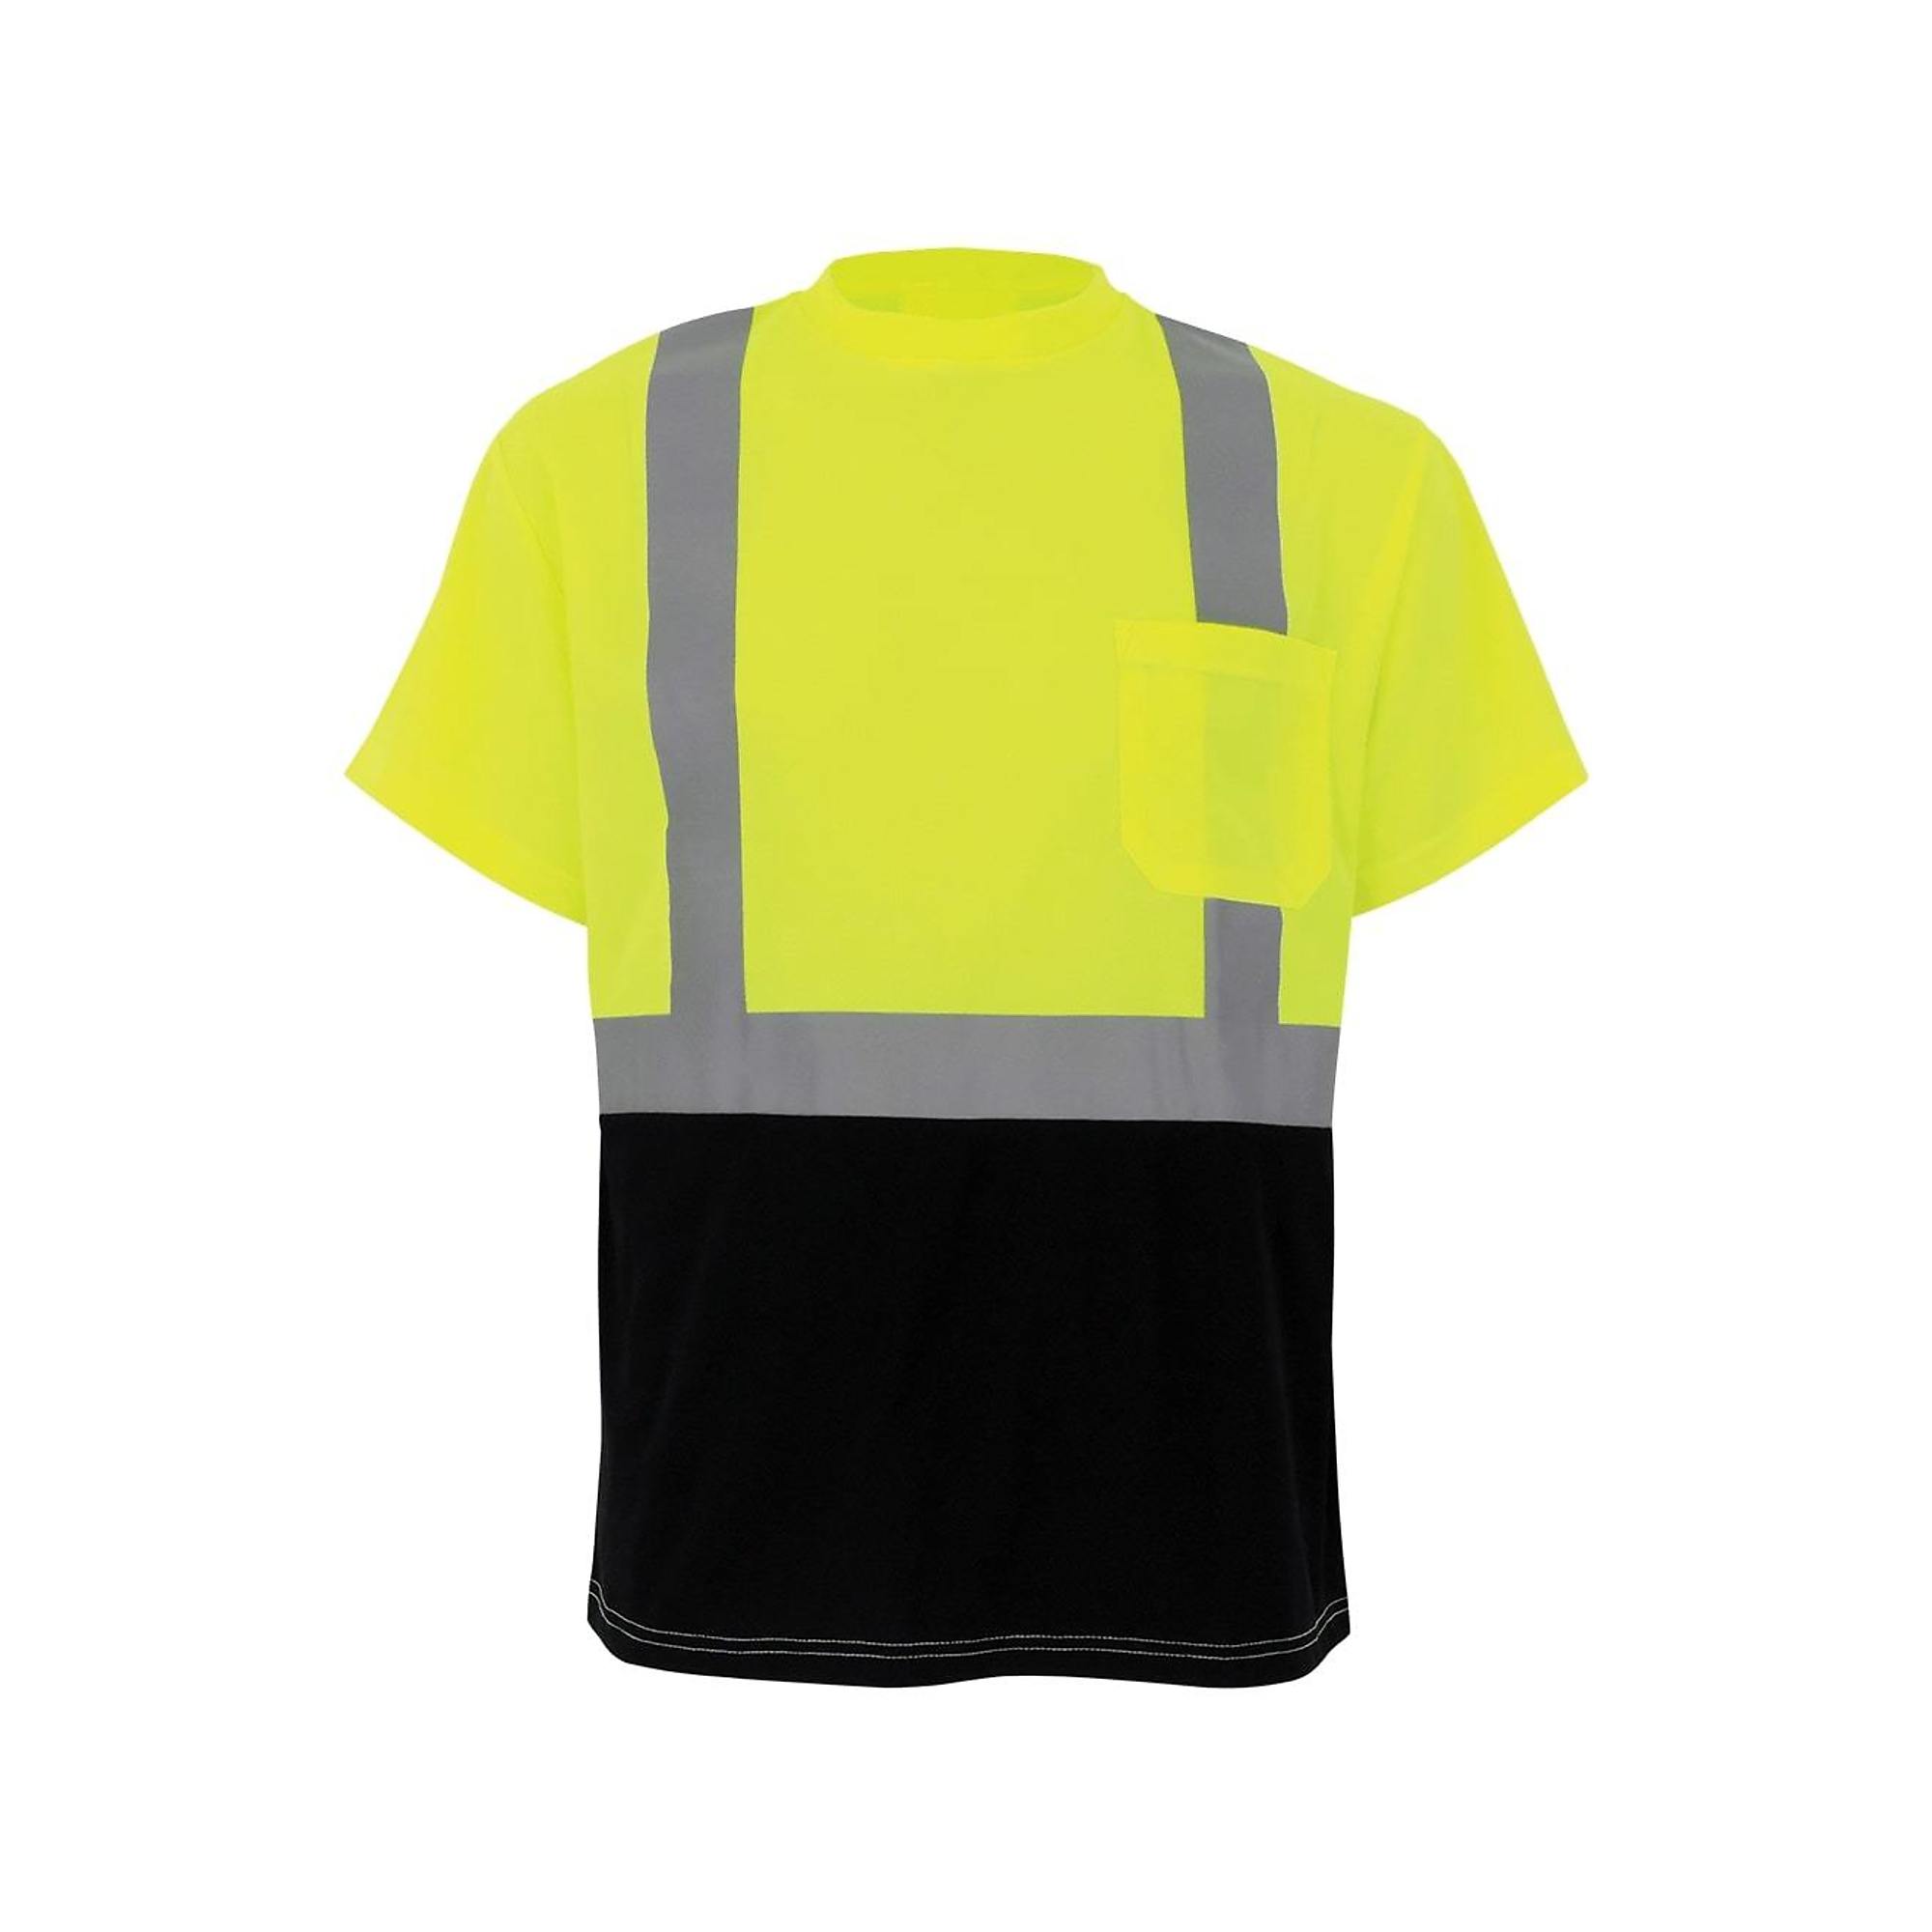 FrogWear, HV Yellow/Green, Class 2 Self-Wicking, Short-Sleeve Shirt, Size 2XL, Model GLO-007B-2XL